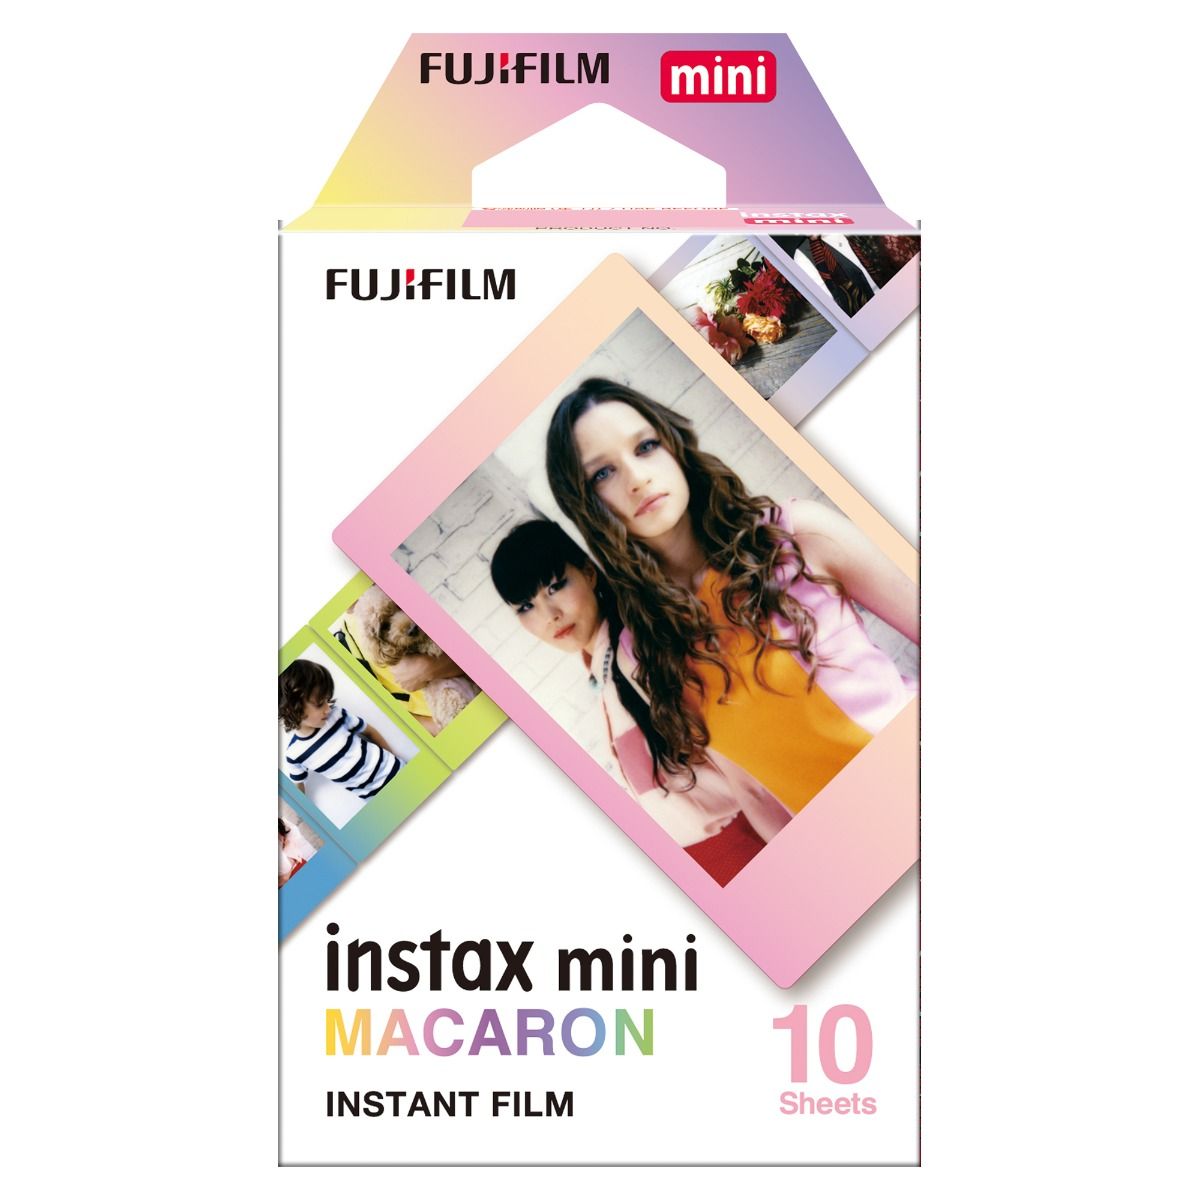 Fujifilm Instax Mini 10X1 macaron Instant Film with 96-sheet Album for mini film  (Pink rose)